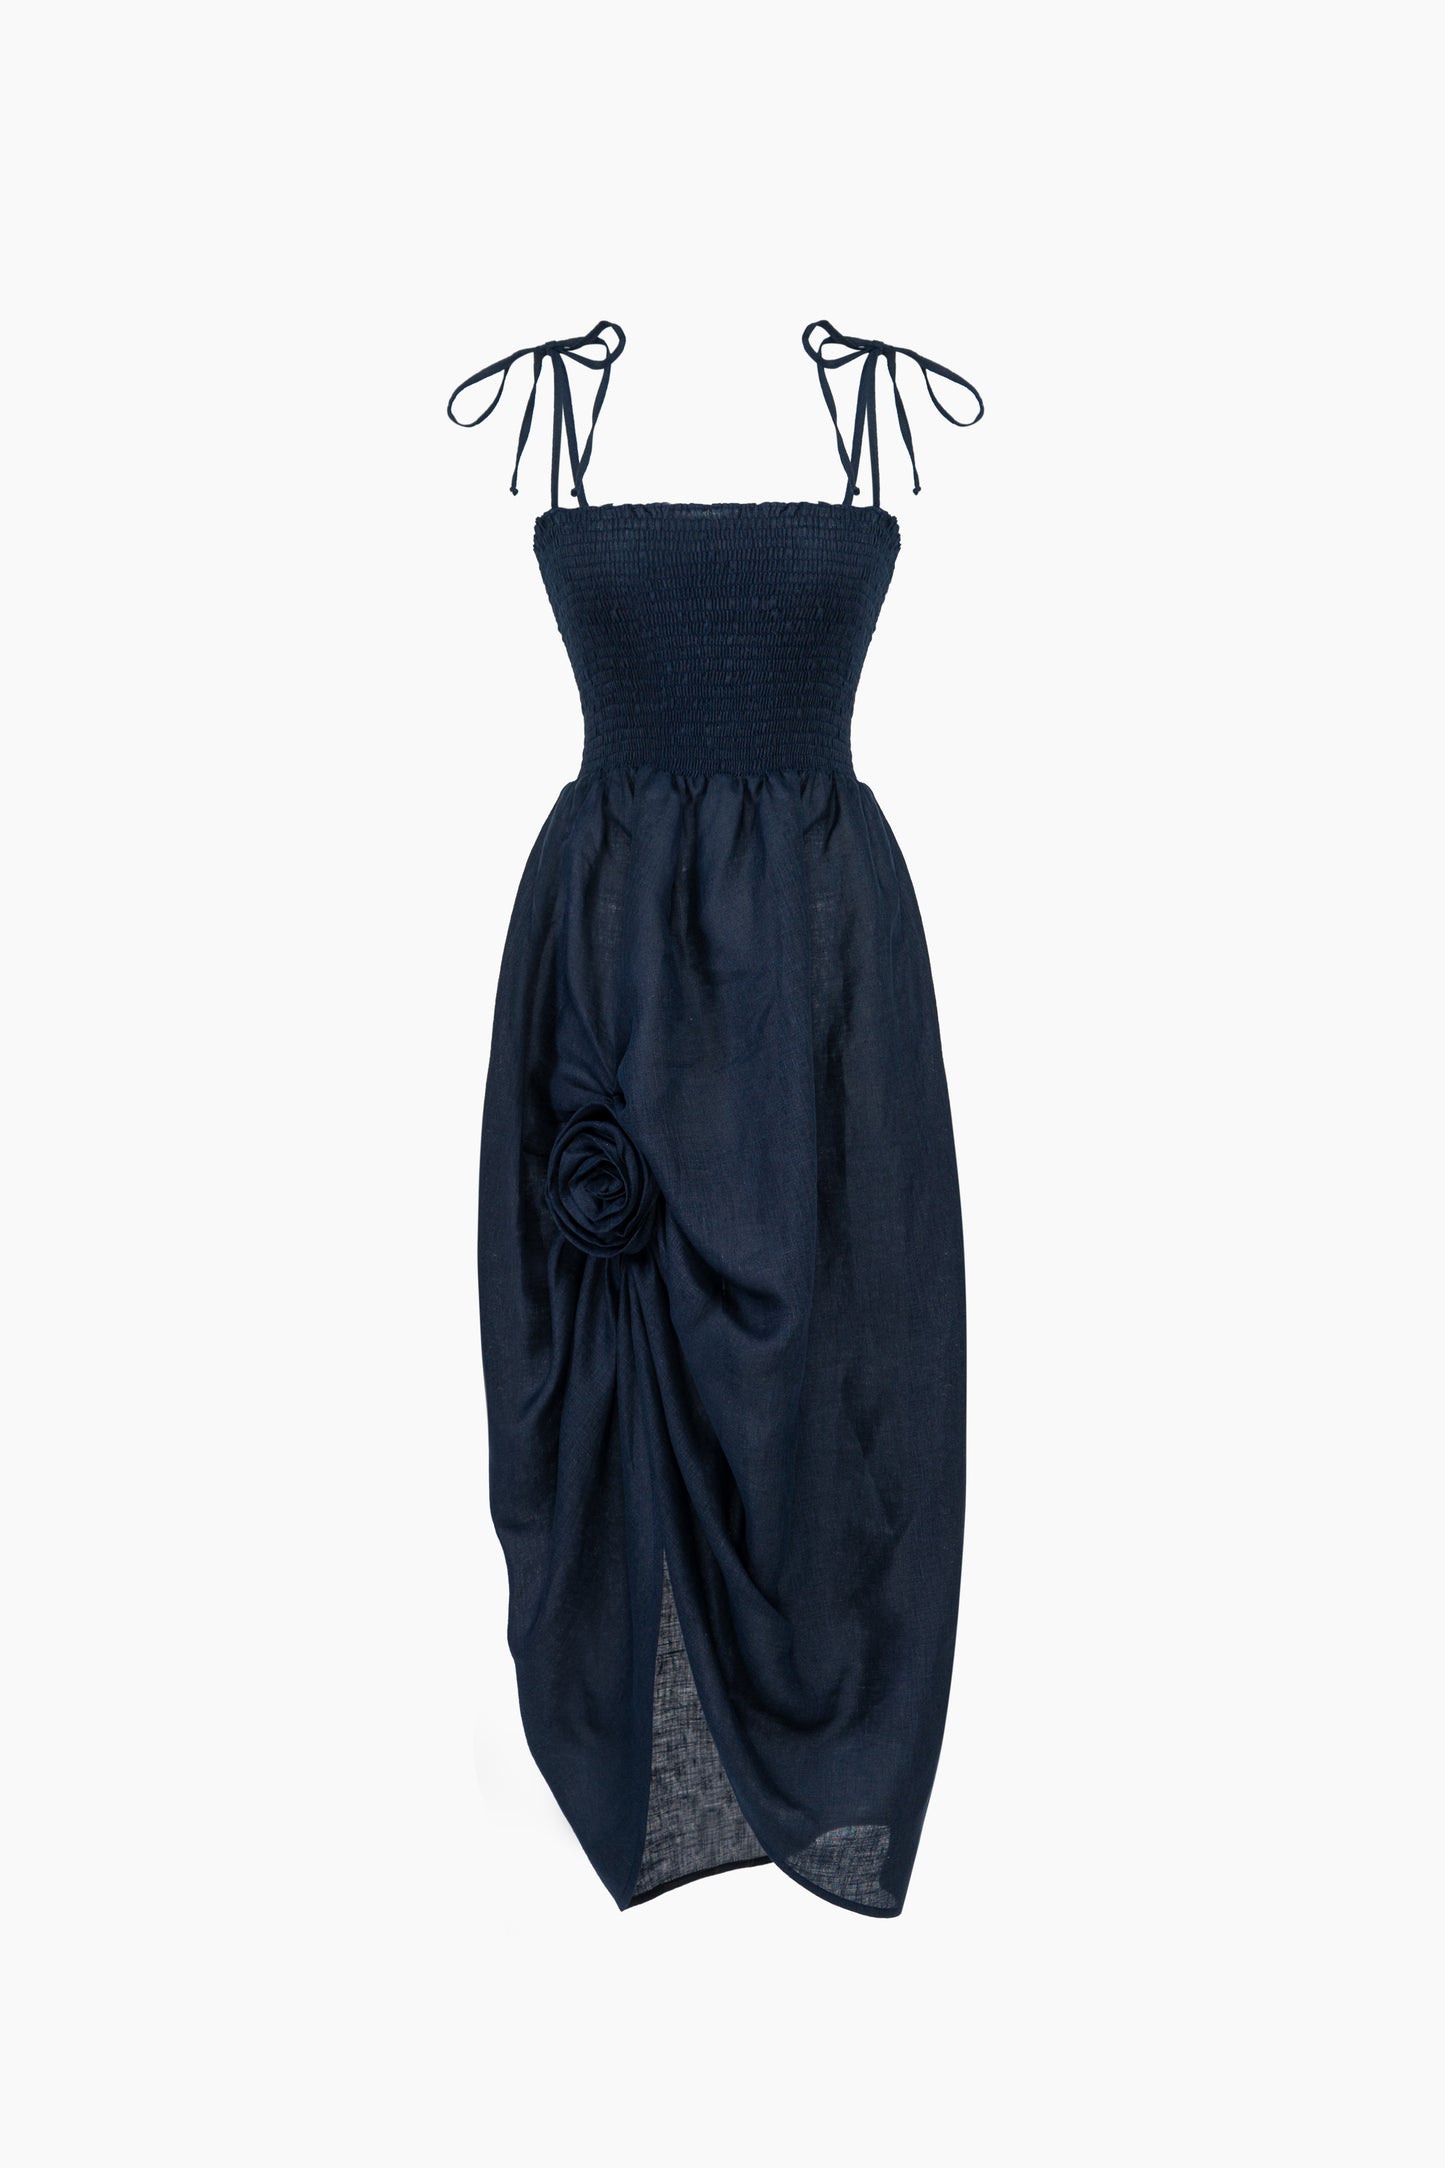 Atlanta Linen Strap Dress with Rose Detail in Navy